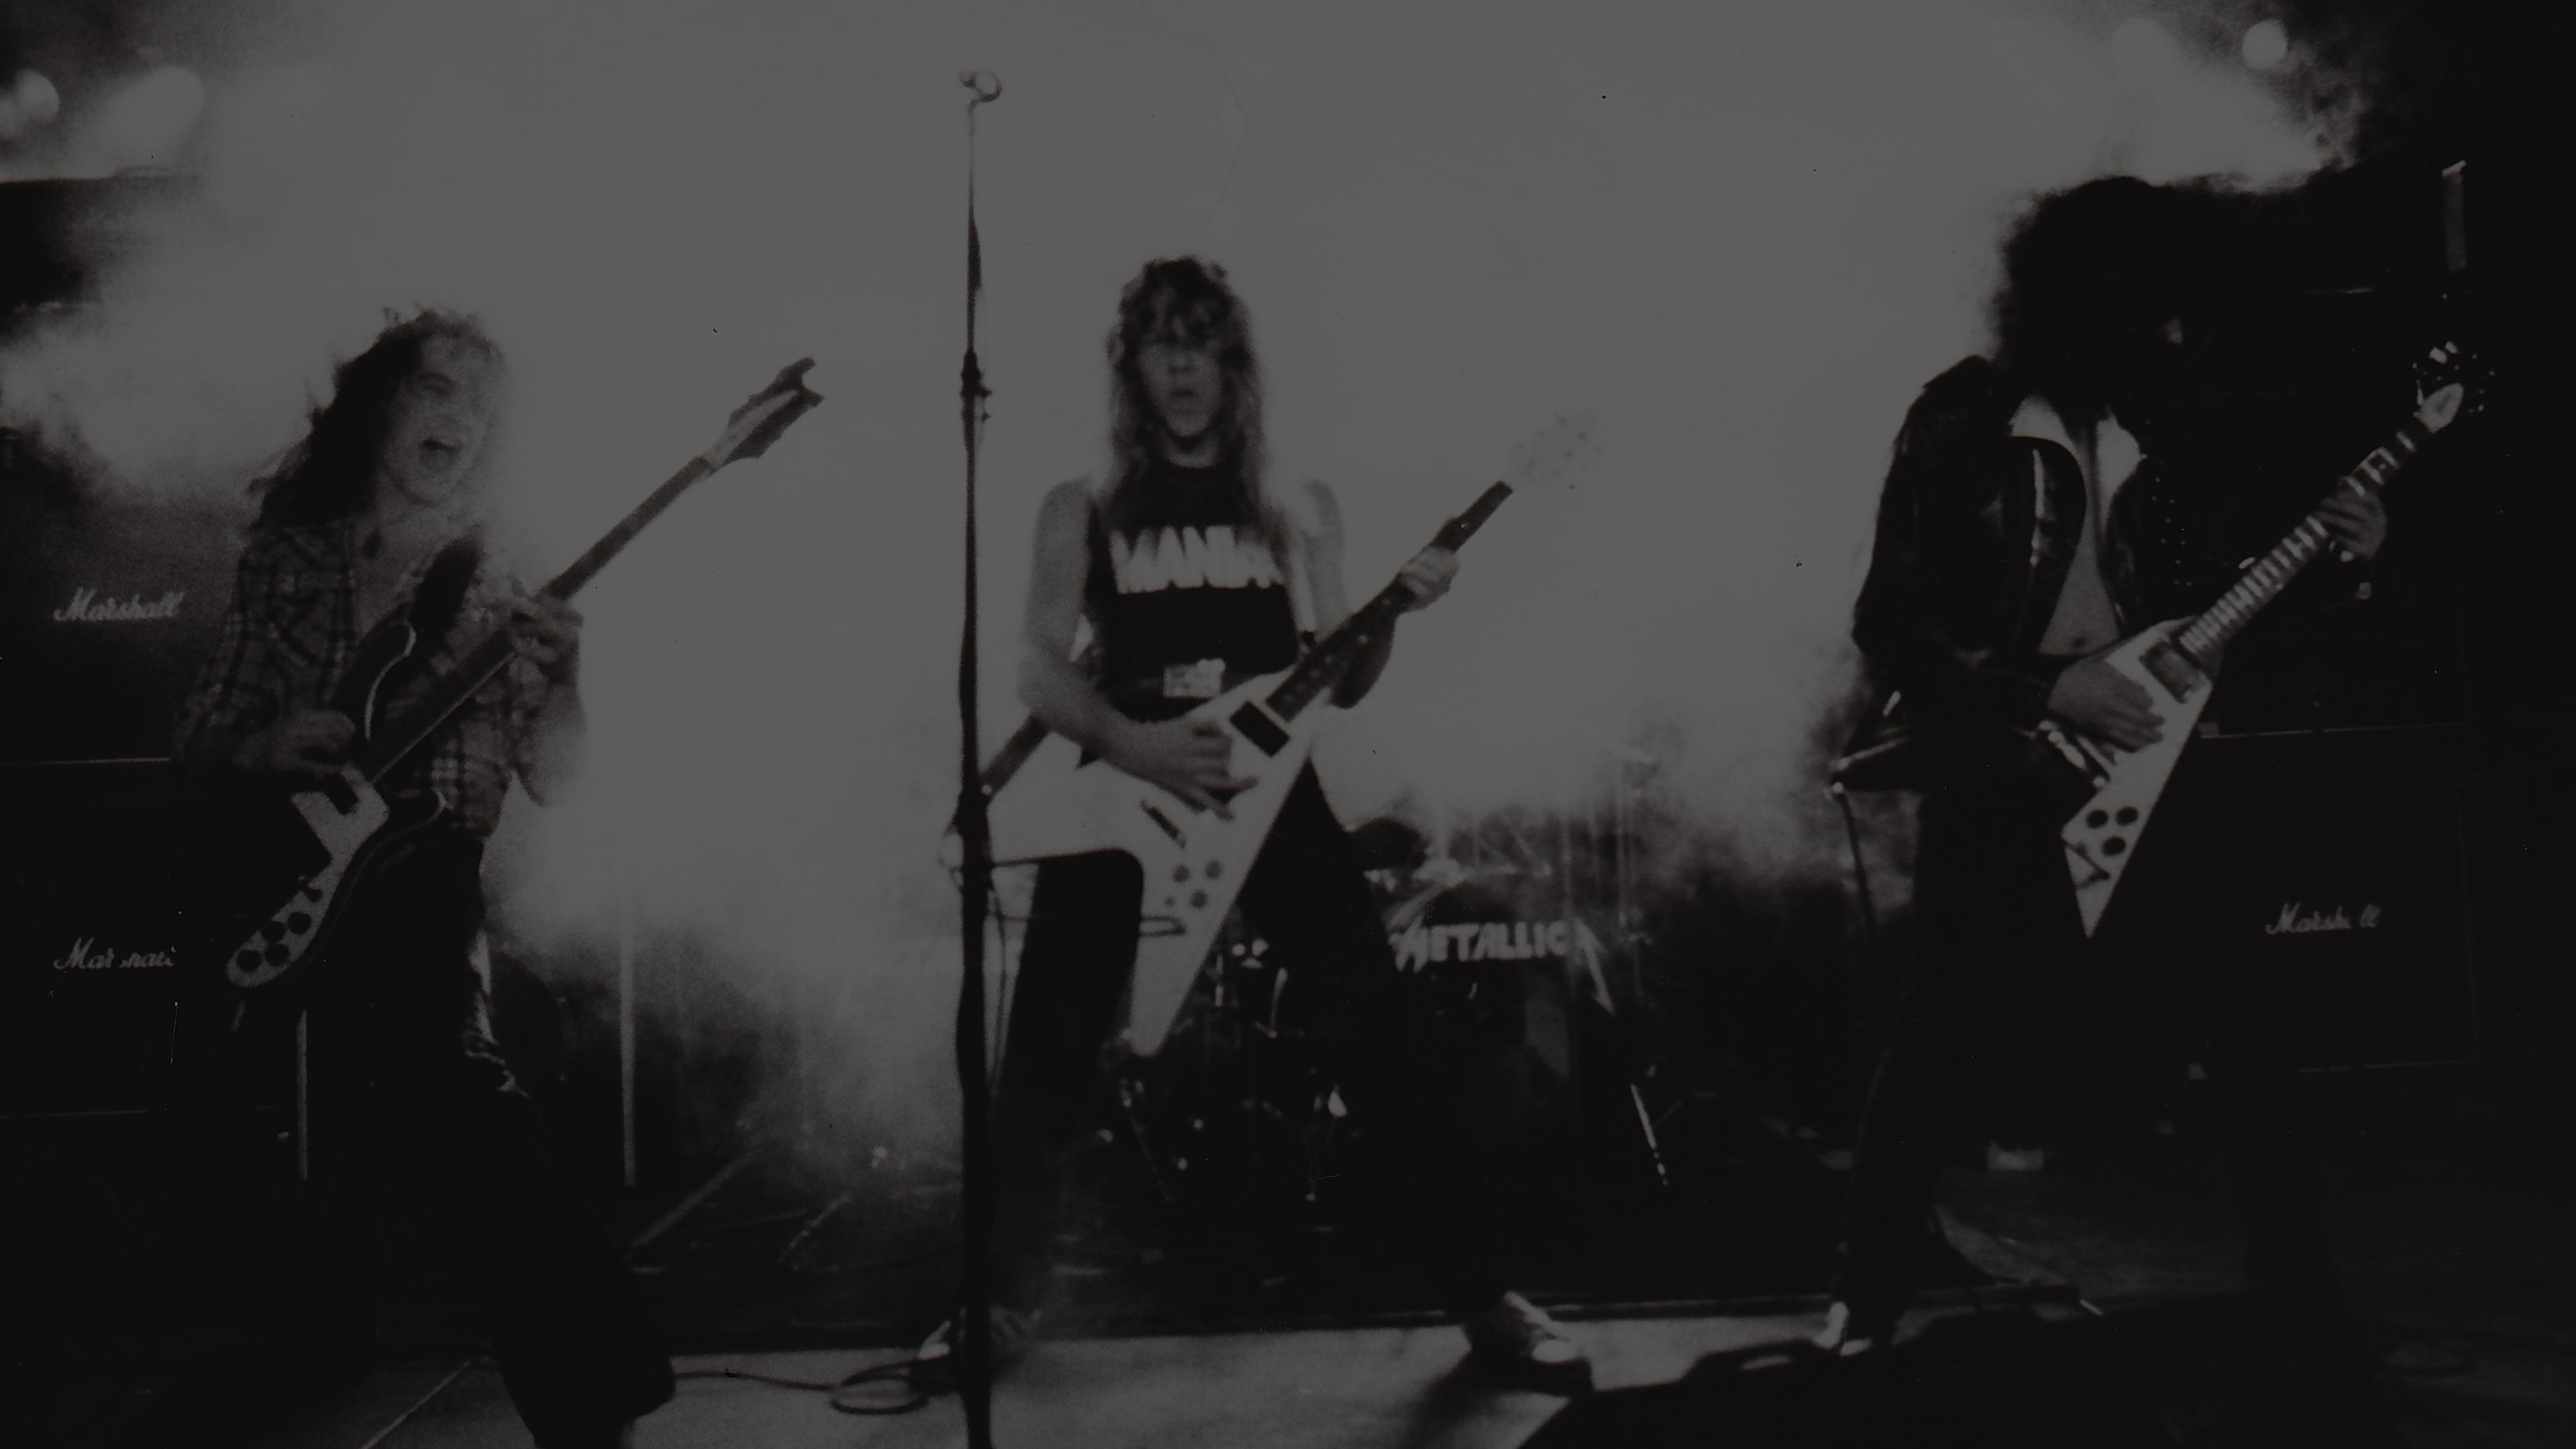 Metallica at Keystone in Palo Alto, CA on October 31, 1983